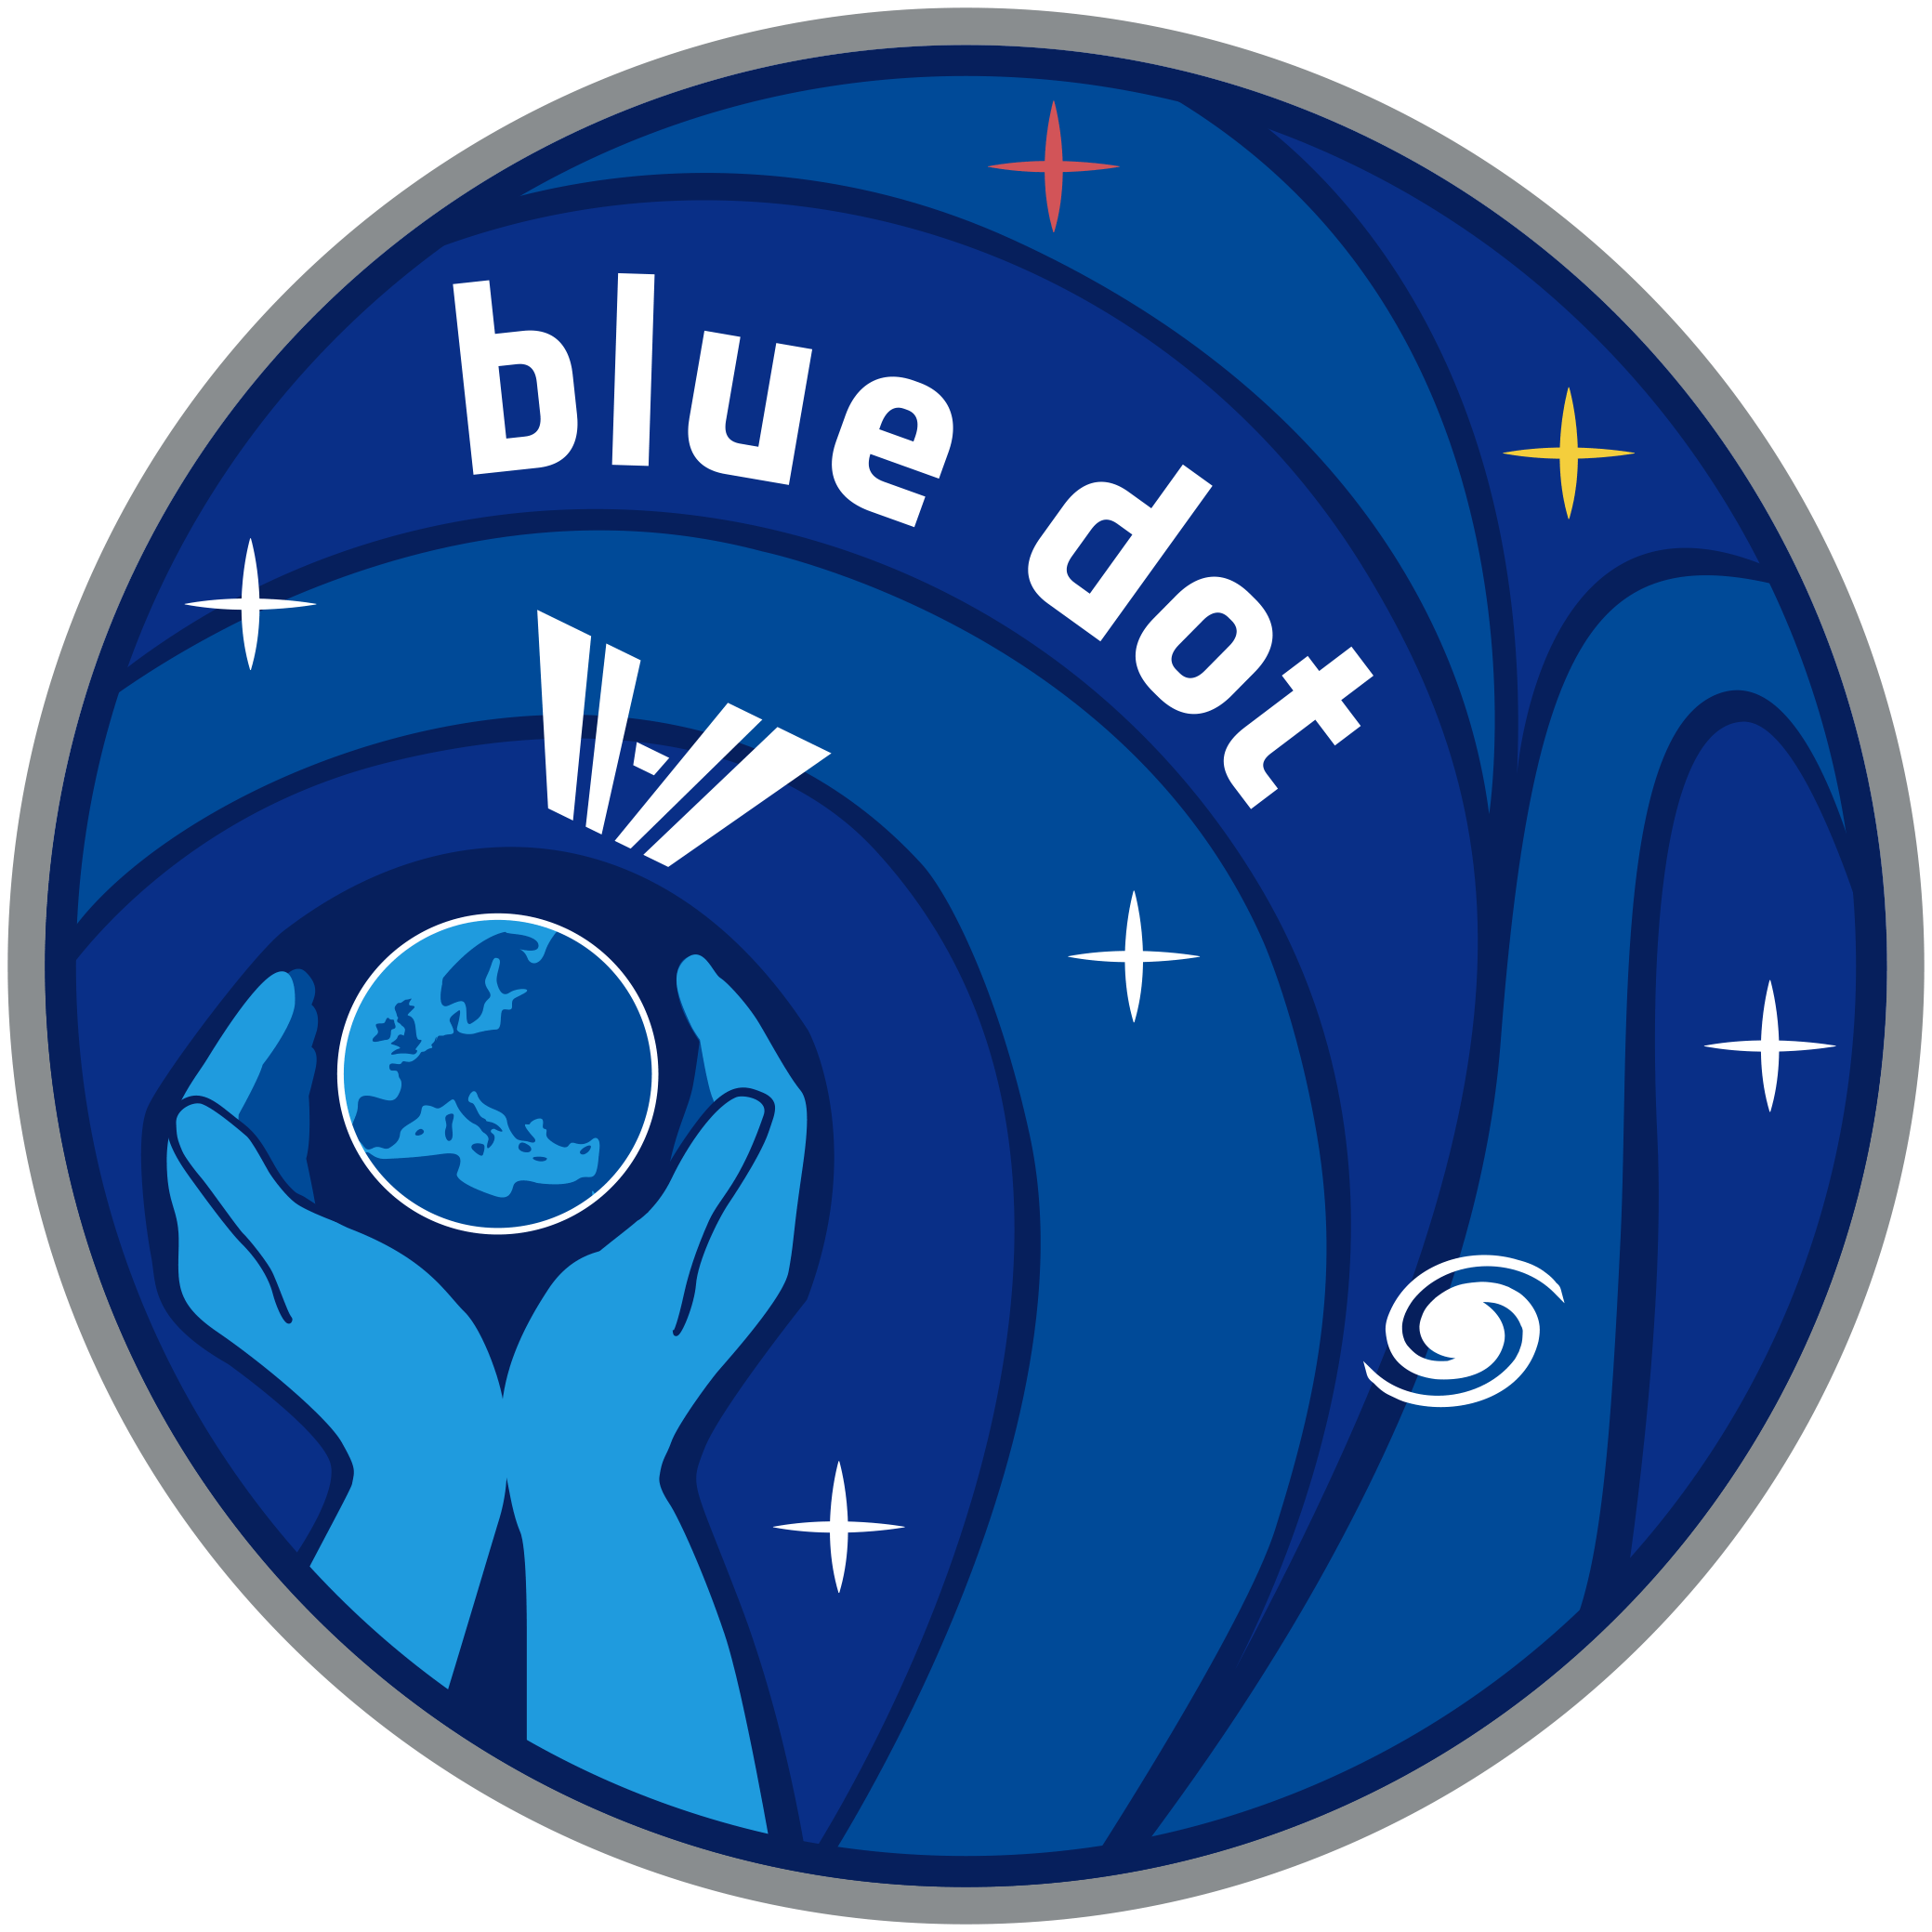 White and Blue Dot Logo - Blue Dot mission logo